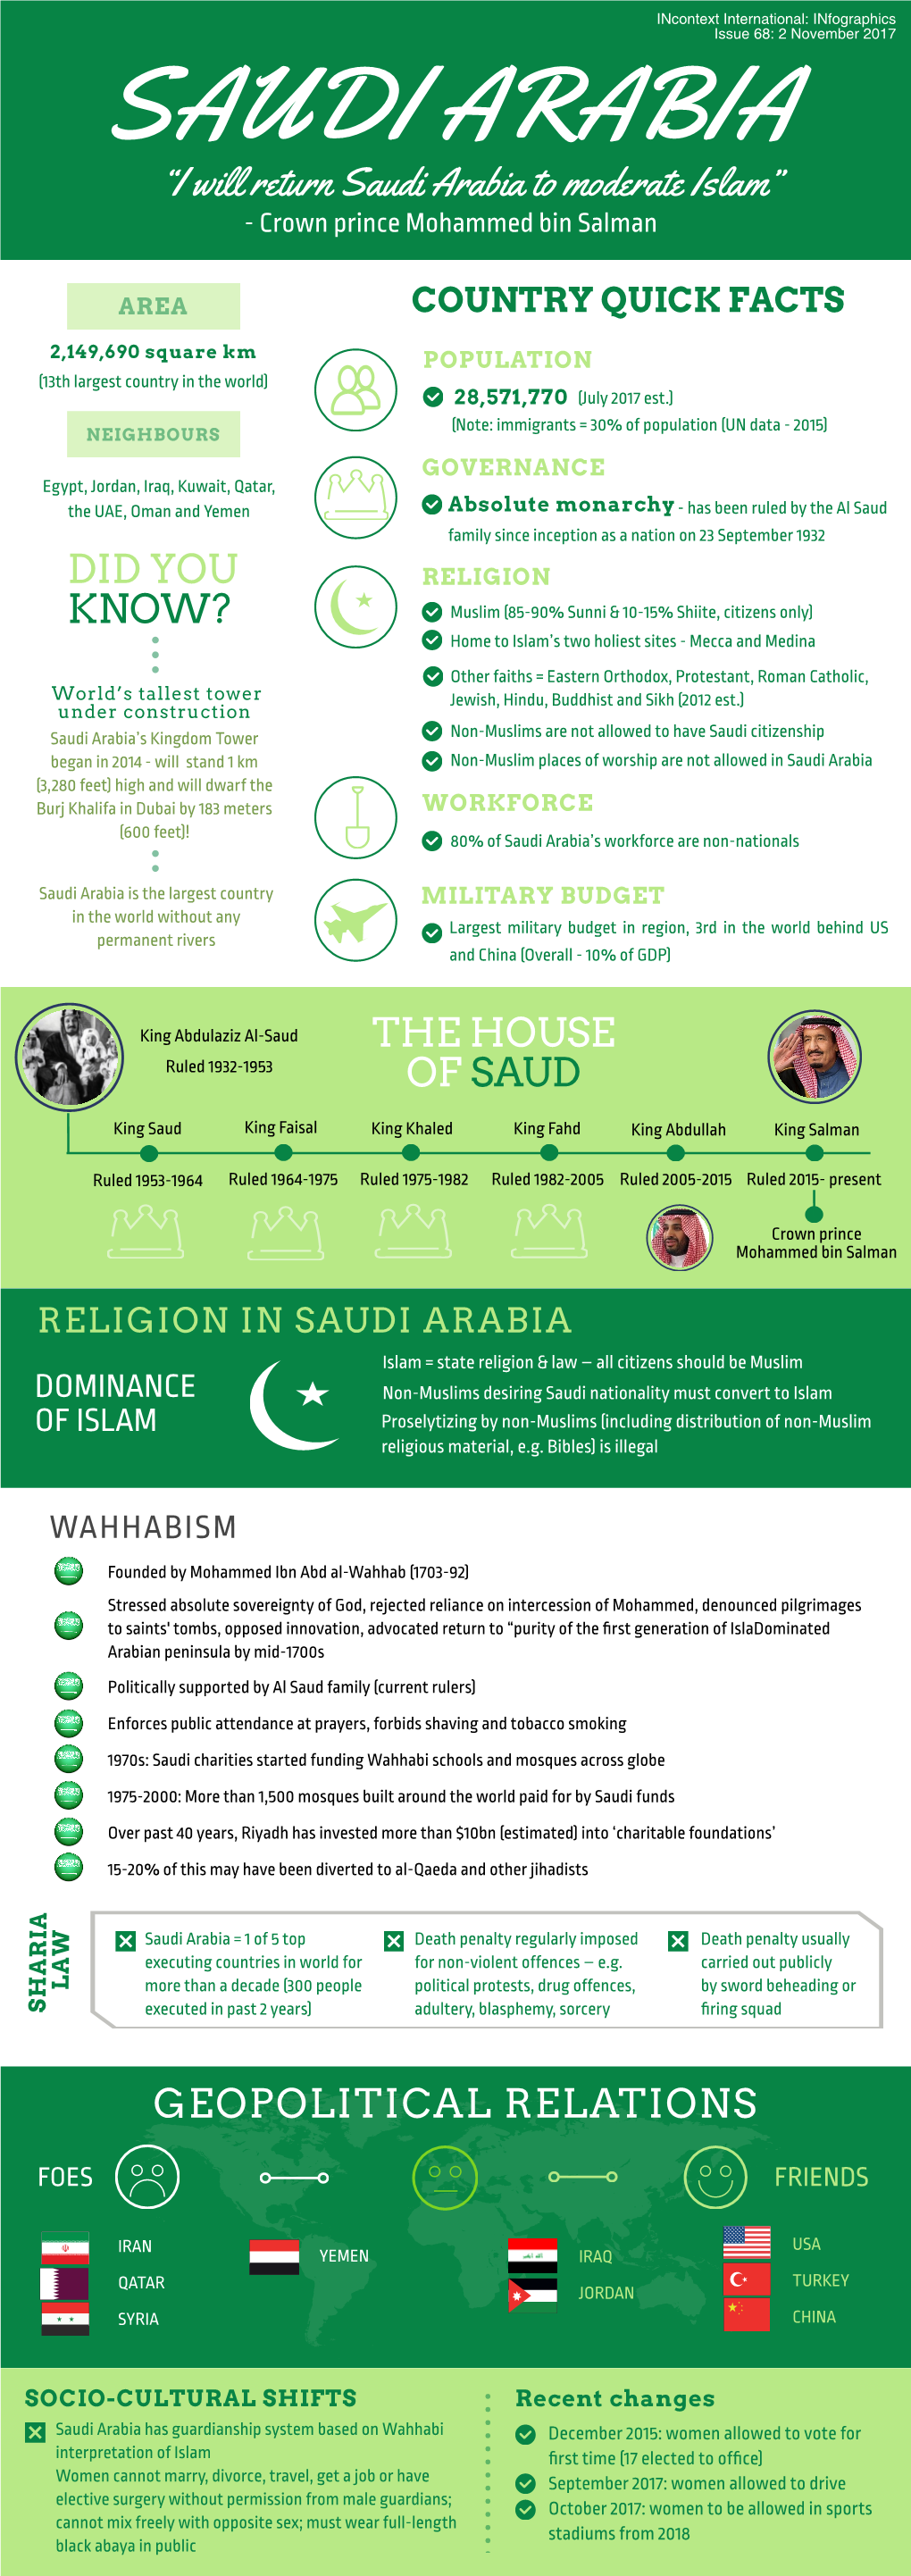 SAUDI ARABIA “I Will Return Saudi Arabia to Moderate Islam” - Crown Prince Mohammed Bin Salman